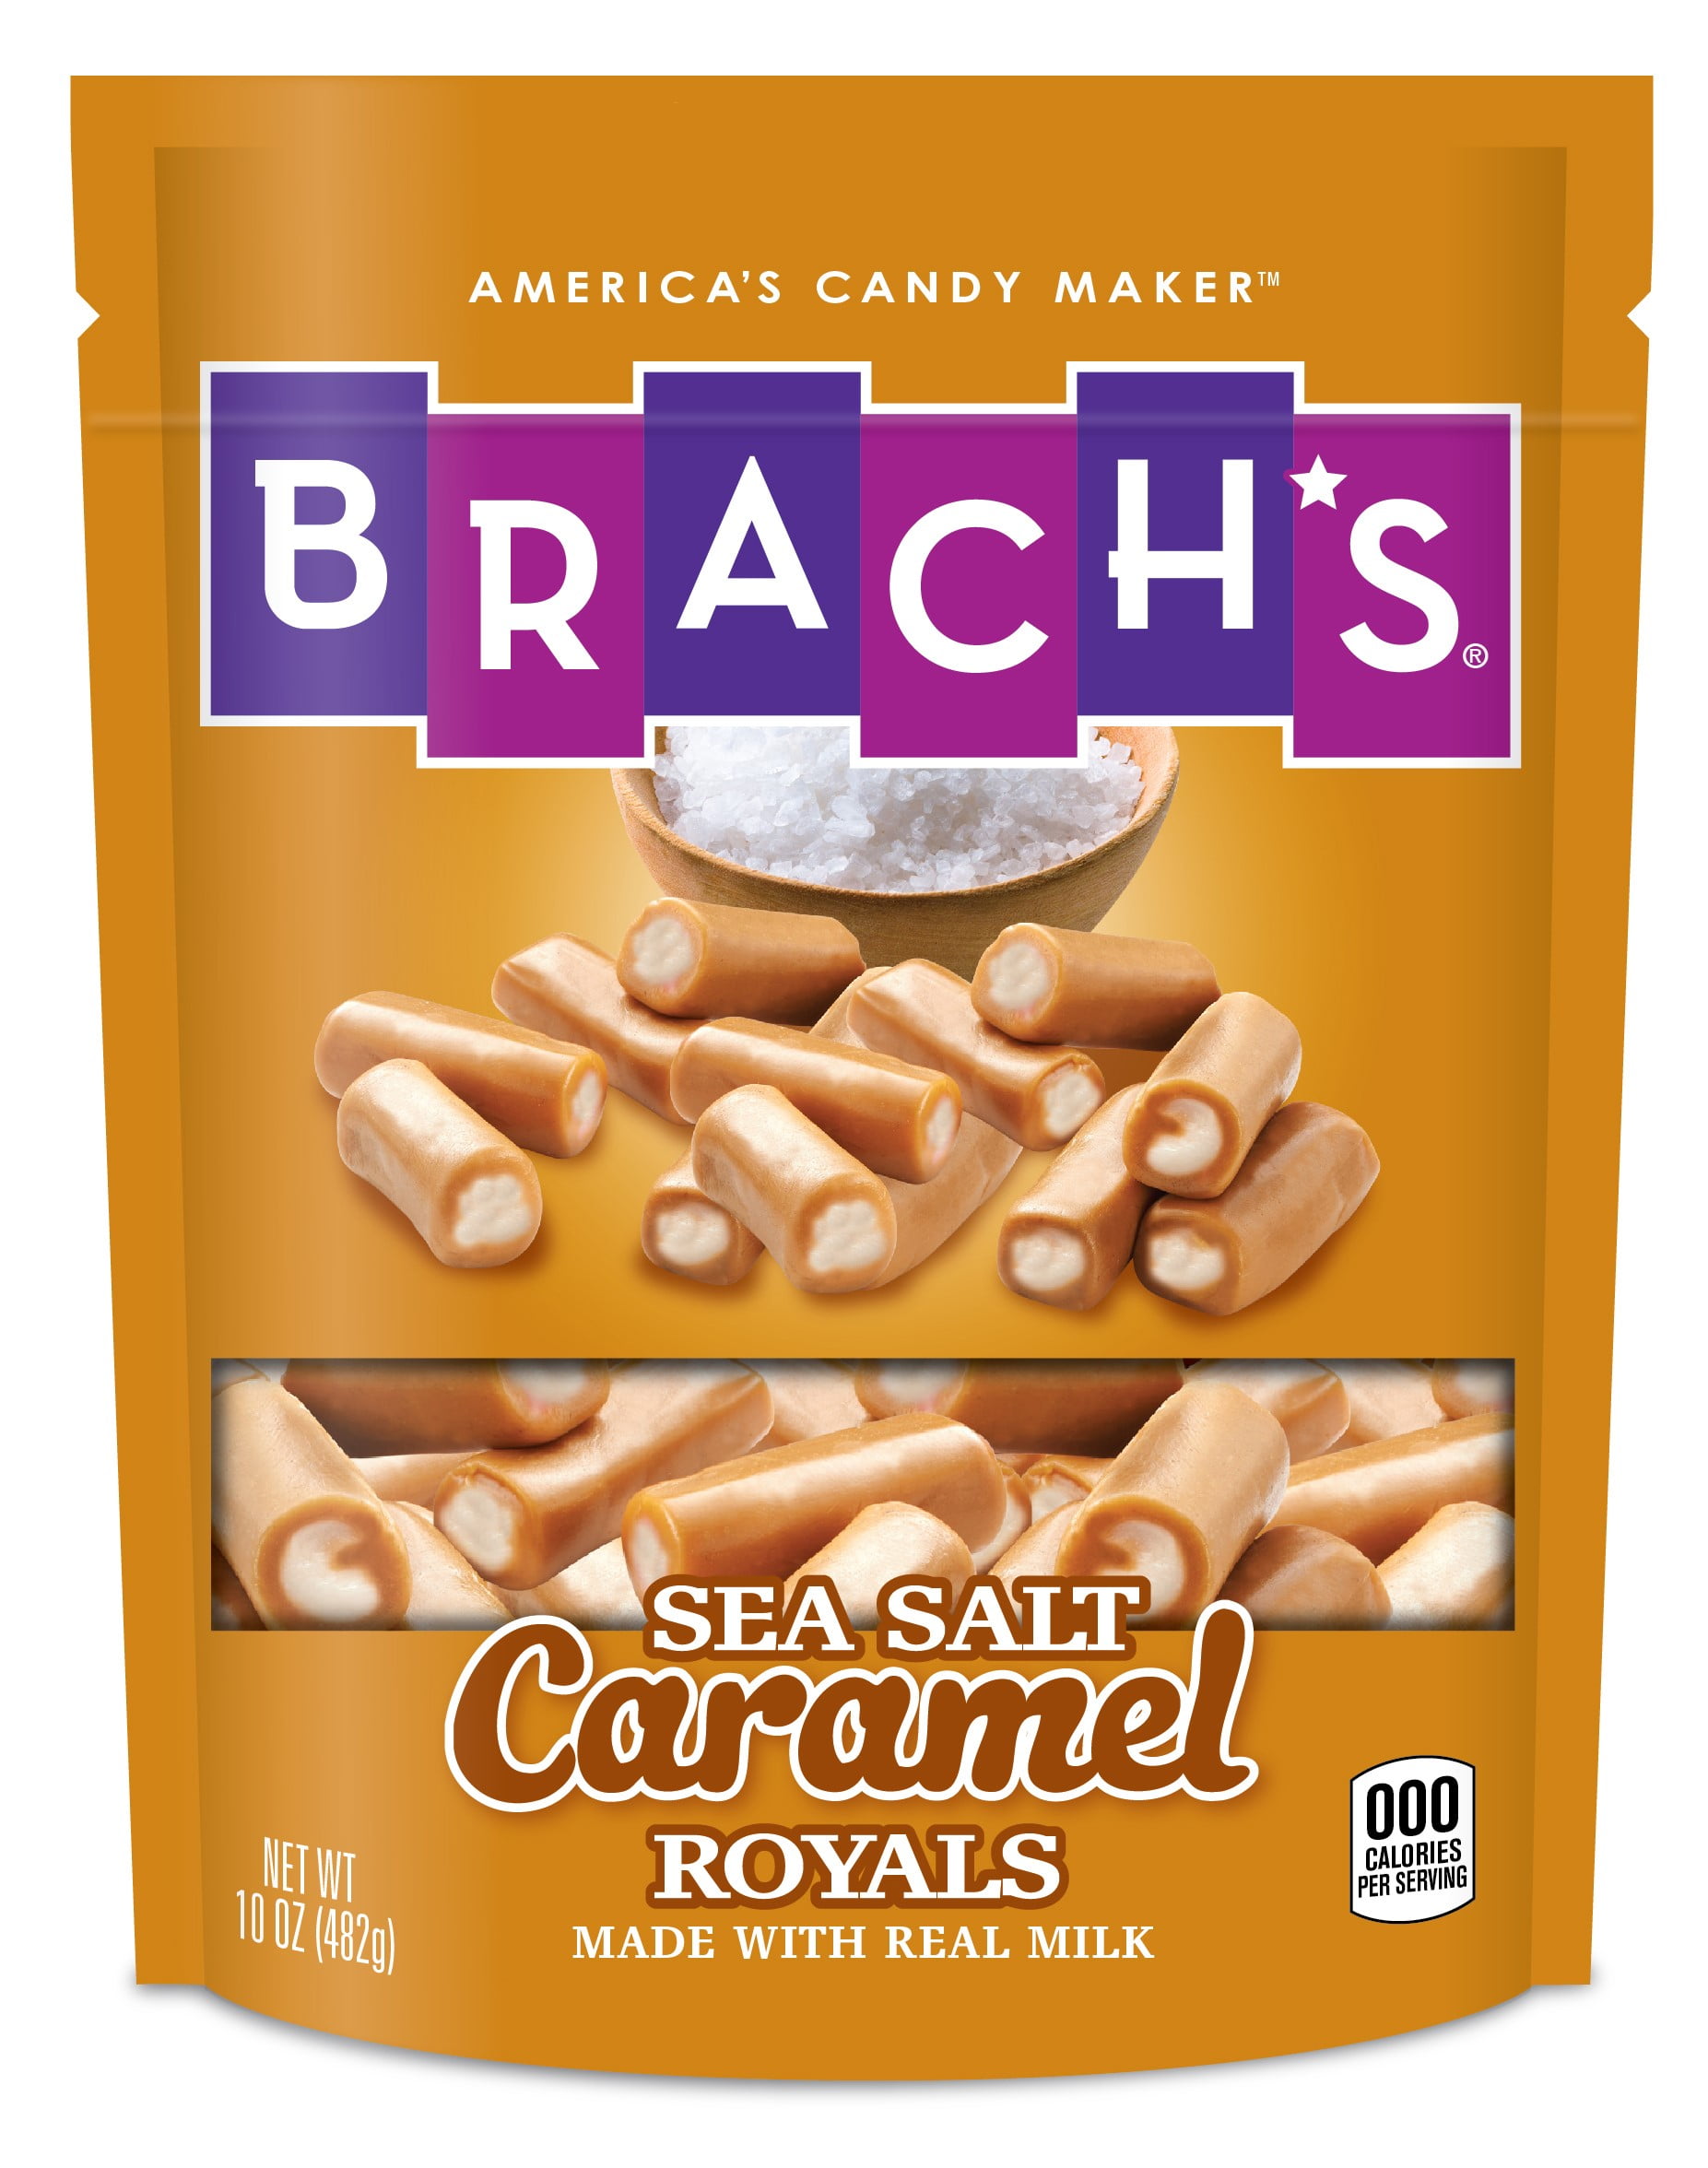  Brach's Milk Maid Caramels Candy, 14 oz : Grocery